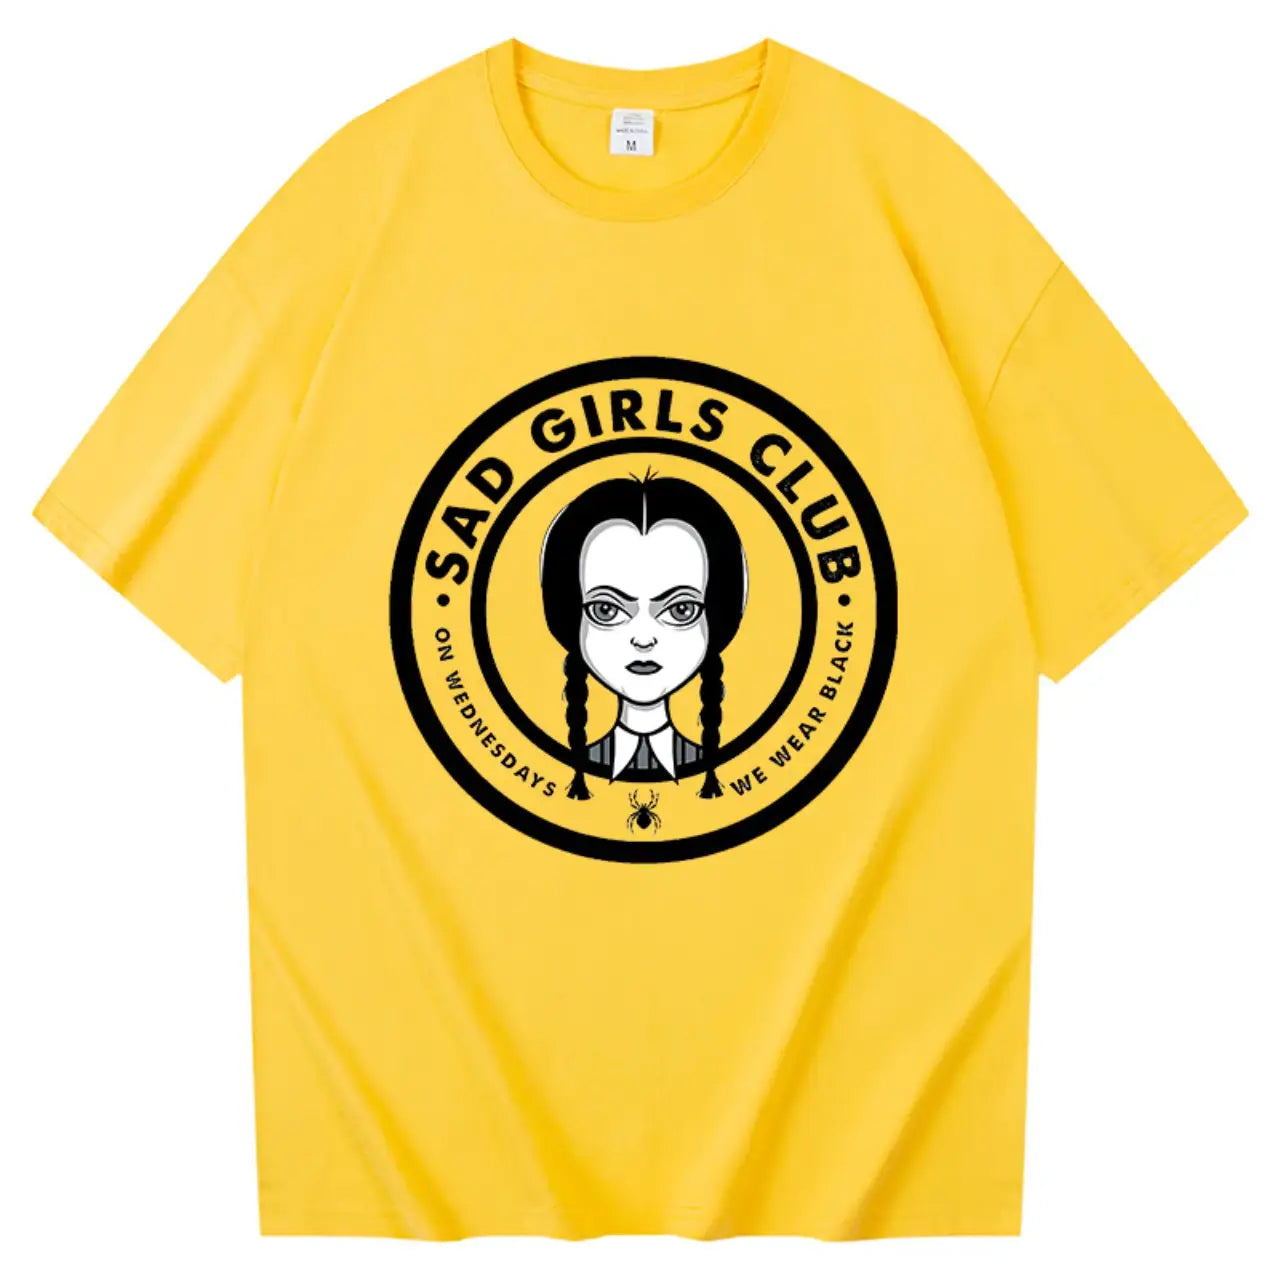 Wednesday Addams Family Sad Girls Club T Shirt